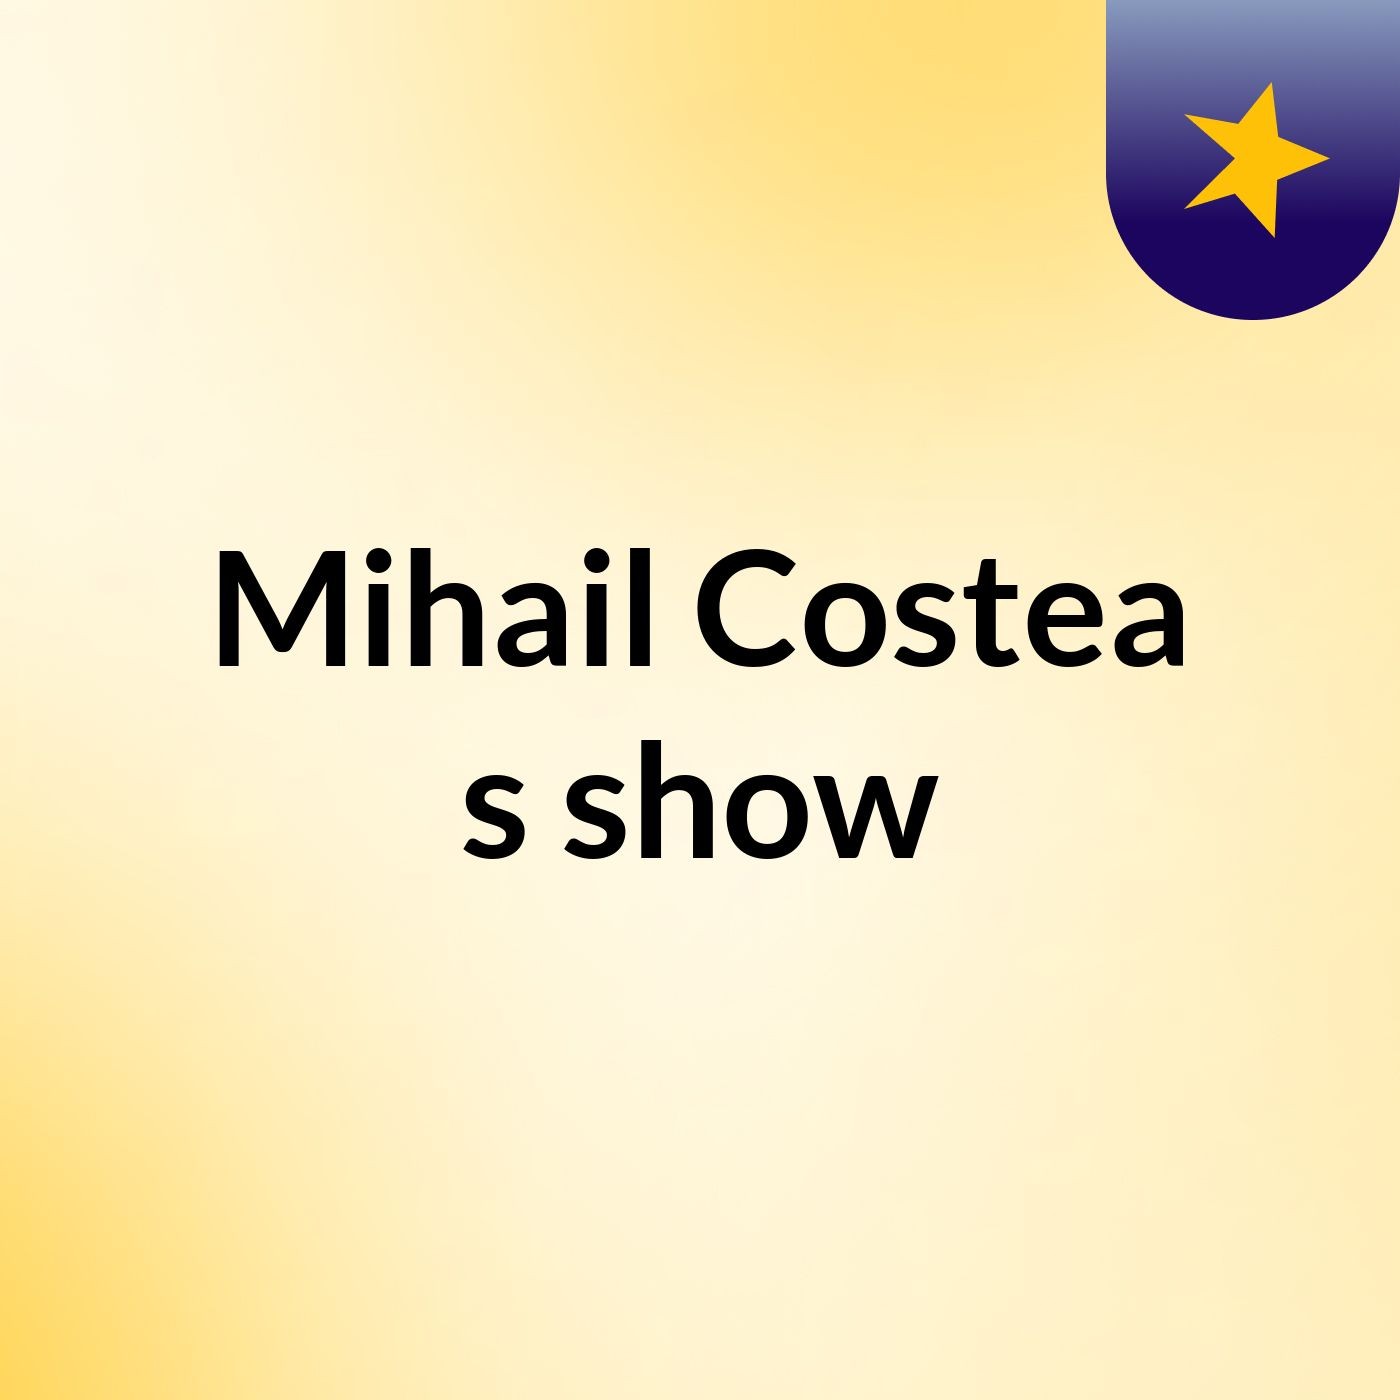 Mihail Costea's show